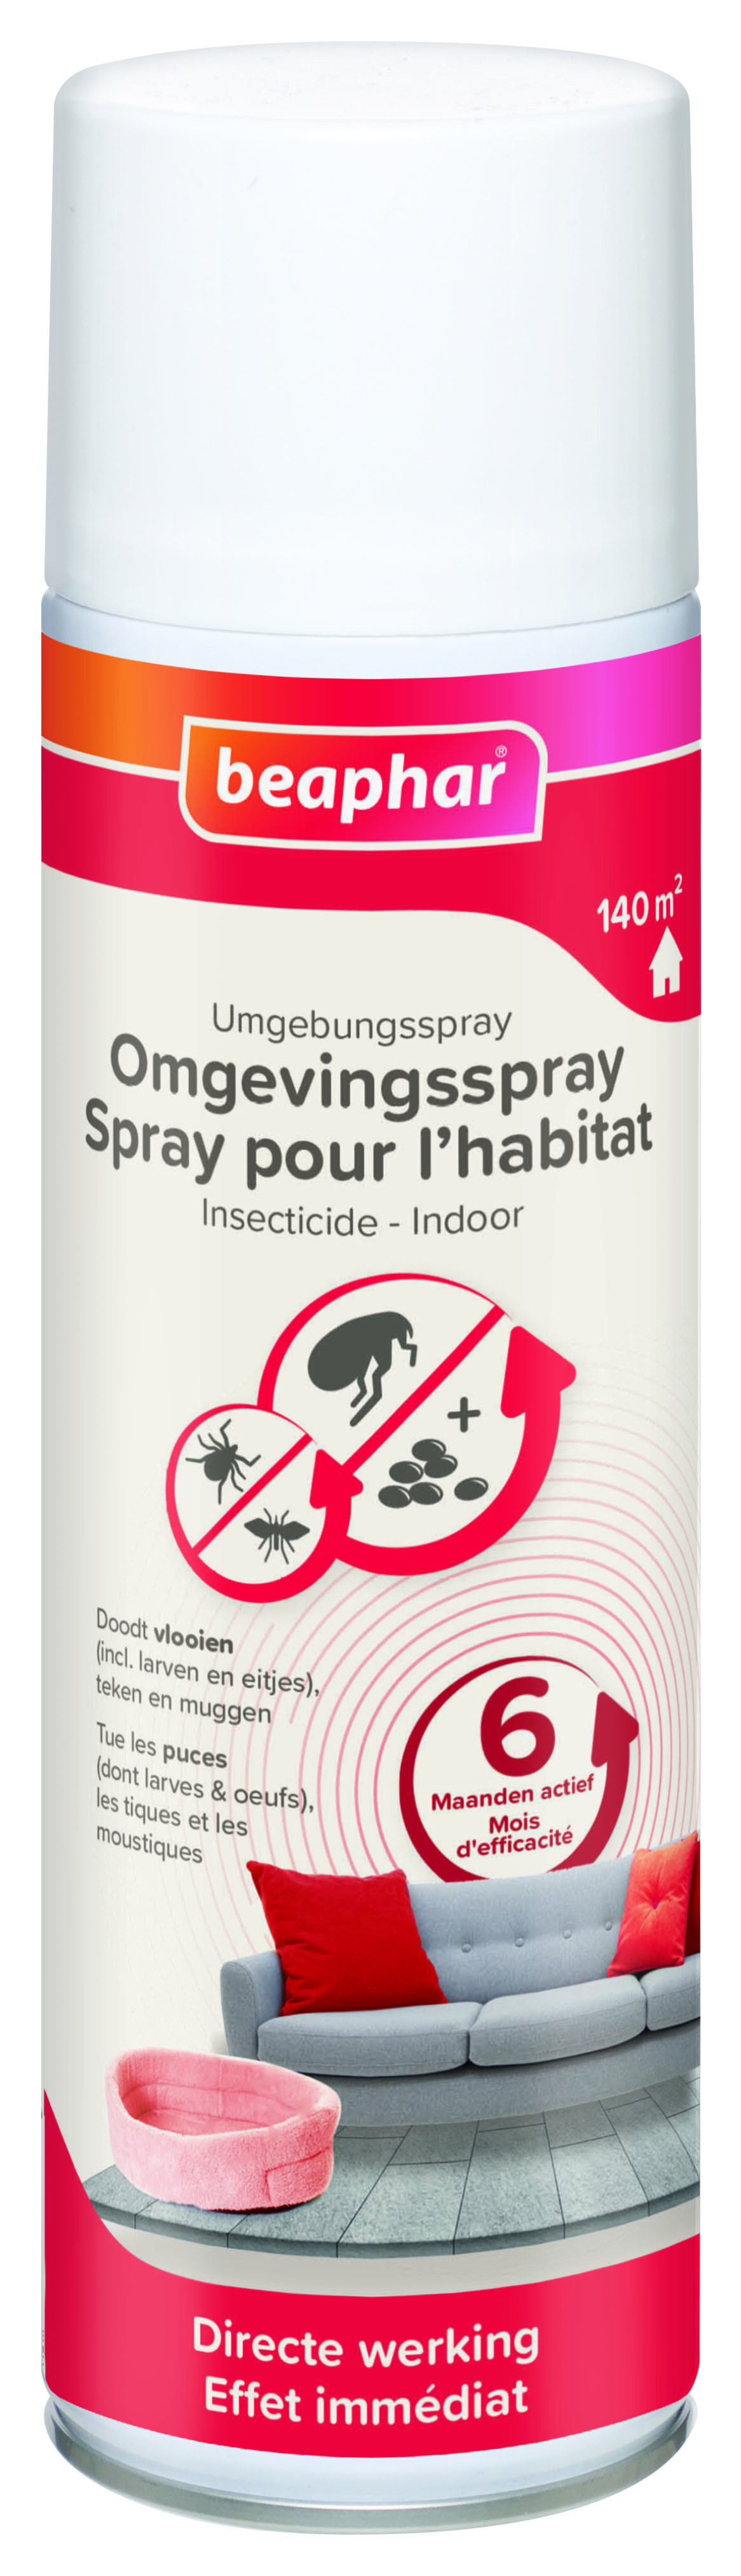 Spray Antipulci per ambienti Beaphar, Economico